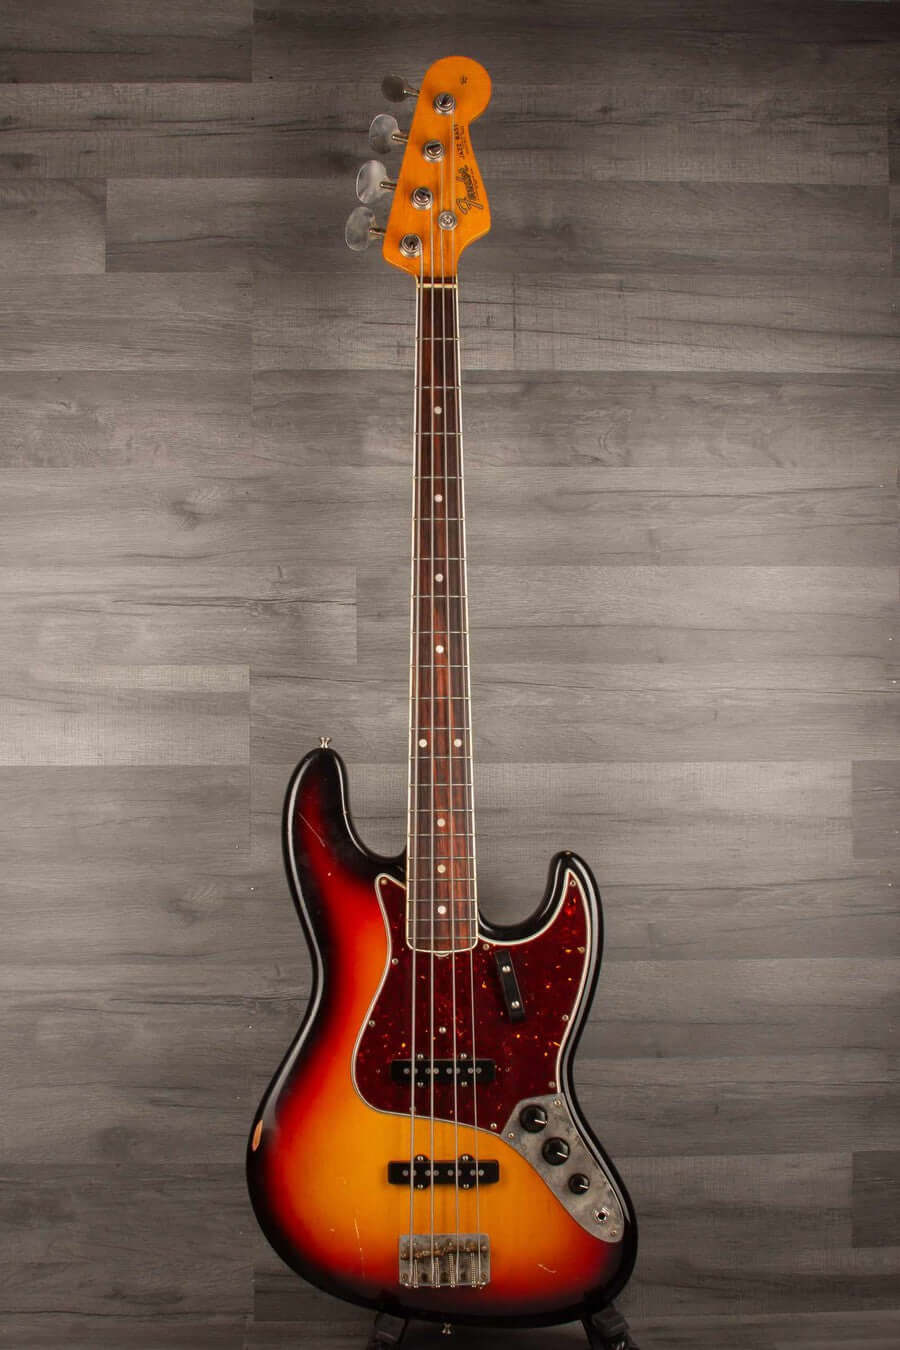 USED - Fender American Vintage II '66 Jazz Bass - 3 Tone Sunburst (aged finish)